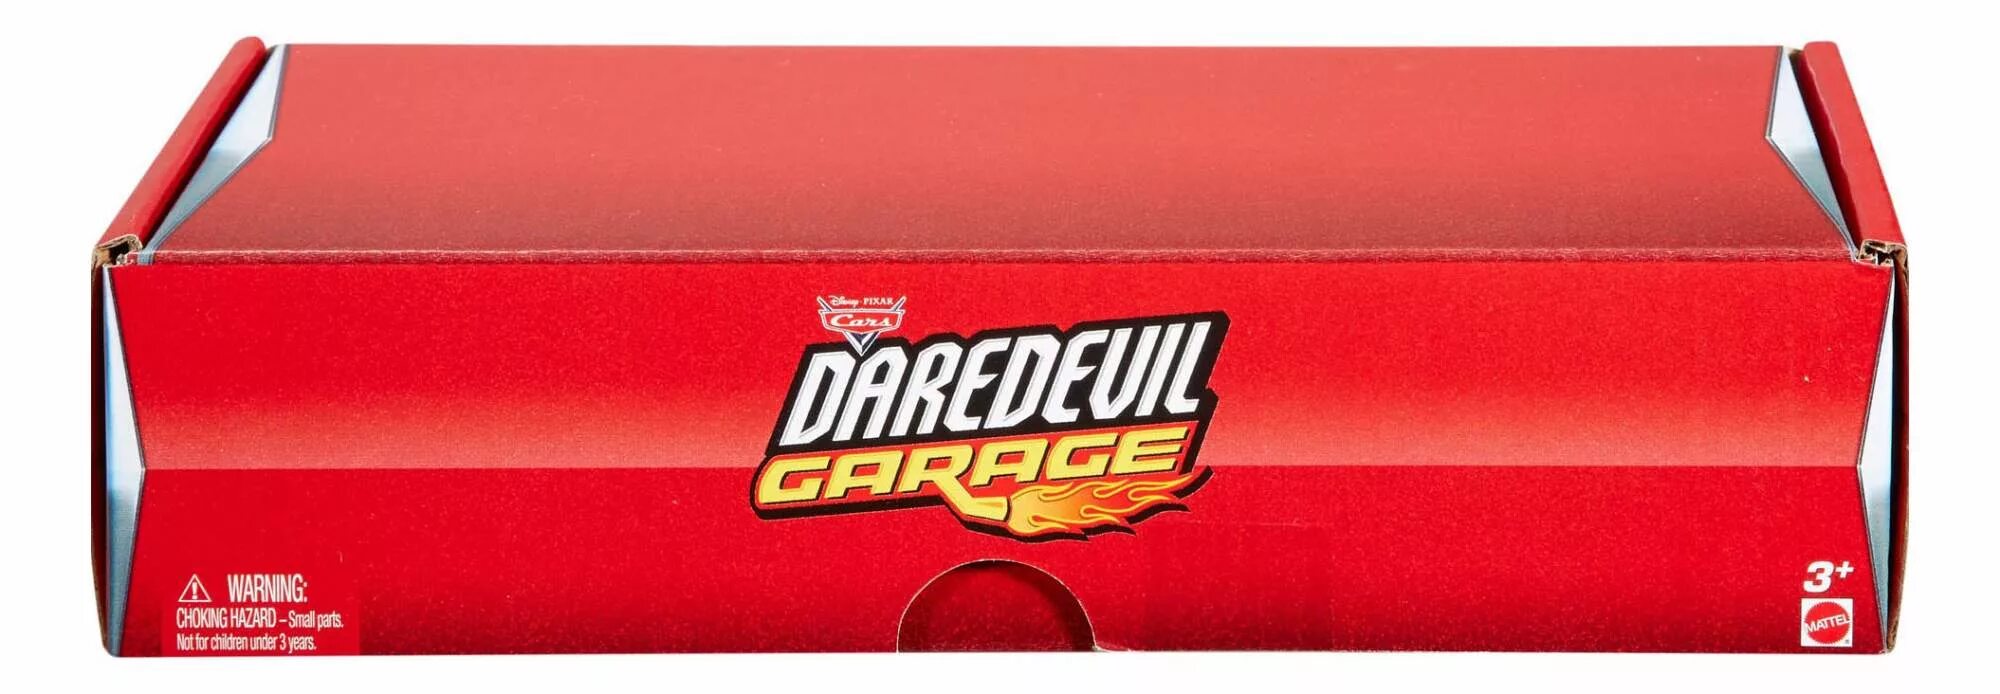 Mattel drg71 игровой набор Daredevil Garage, Тачки. Cars Daredevil Garage drg71. Cars Daredevil Garage MCQUEEN. Cars Daredevil Garage Mattel редкие.